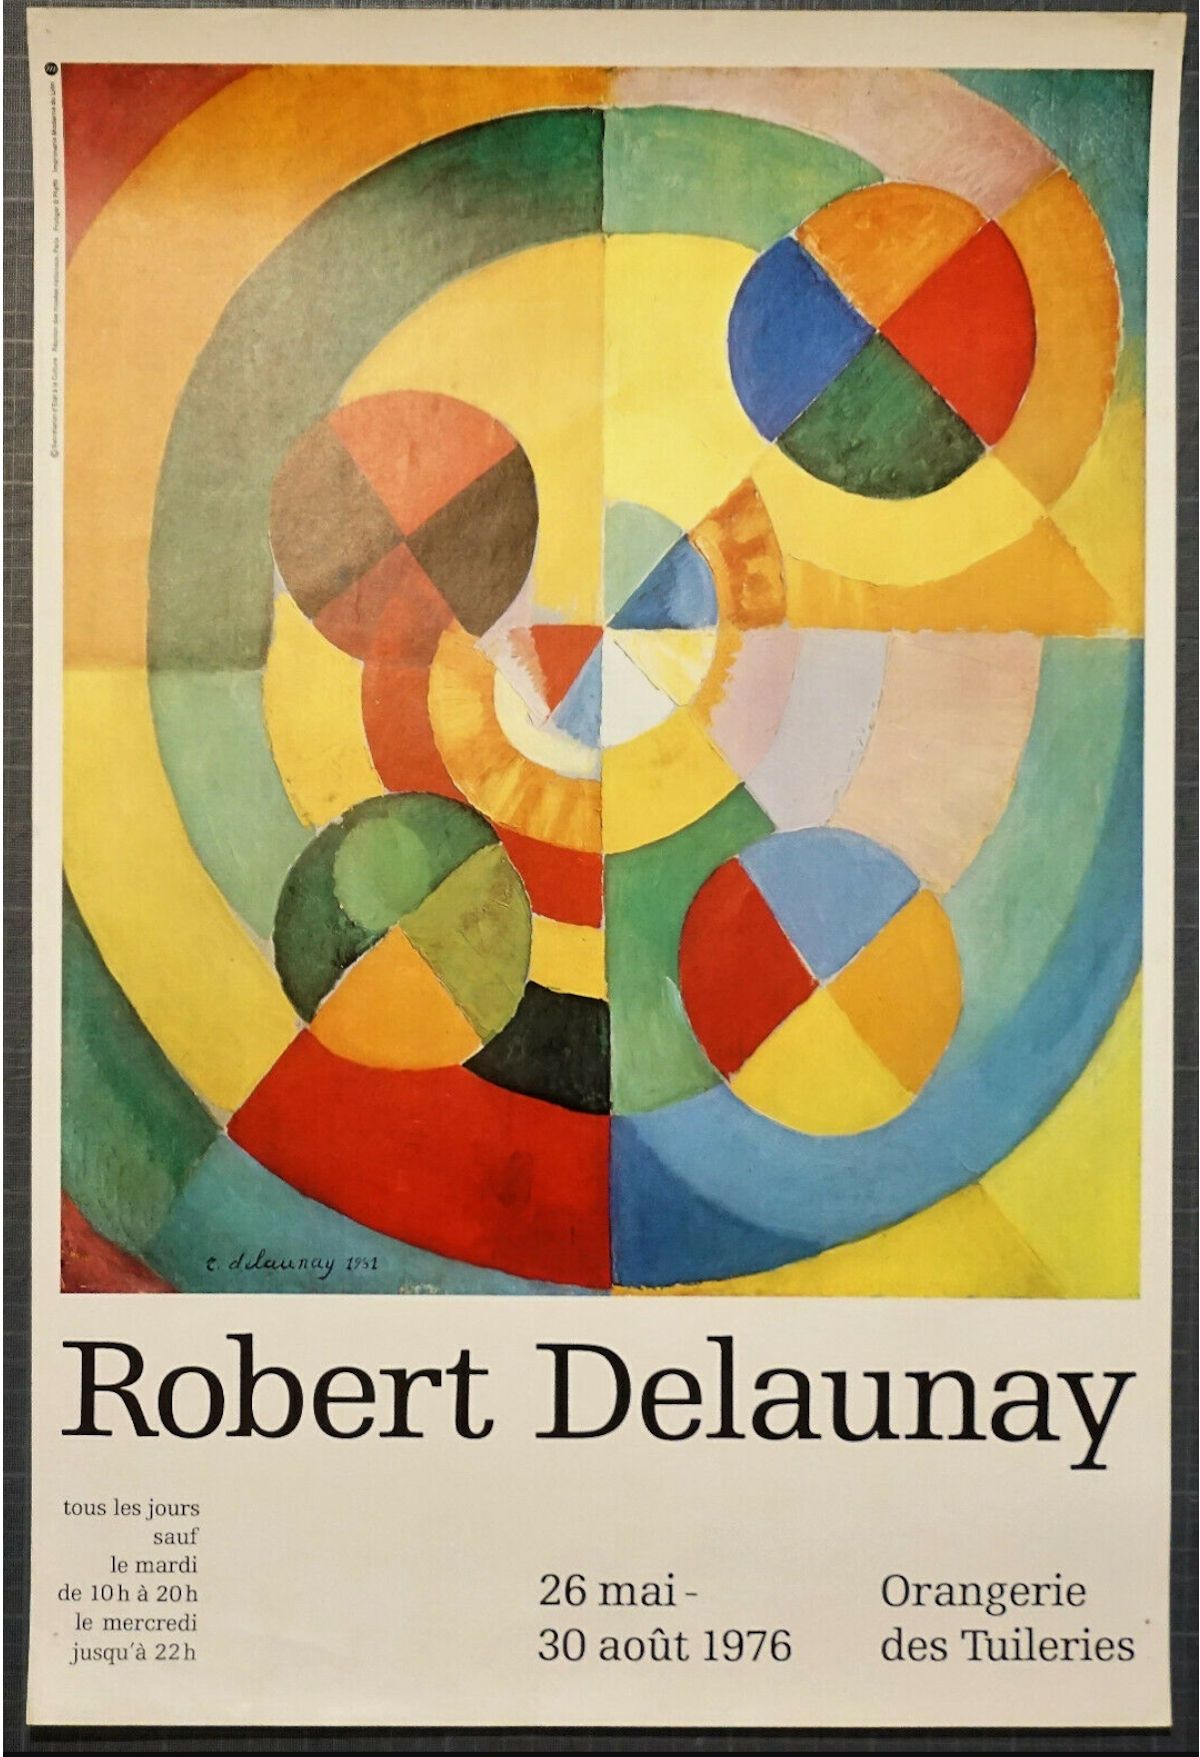 Robert DELAUNAY Robert DELAUNAY

Mostra all'Orangerie, 1976

Manifesto originale&hellip;